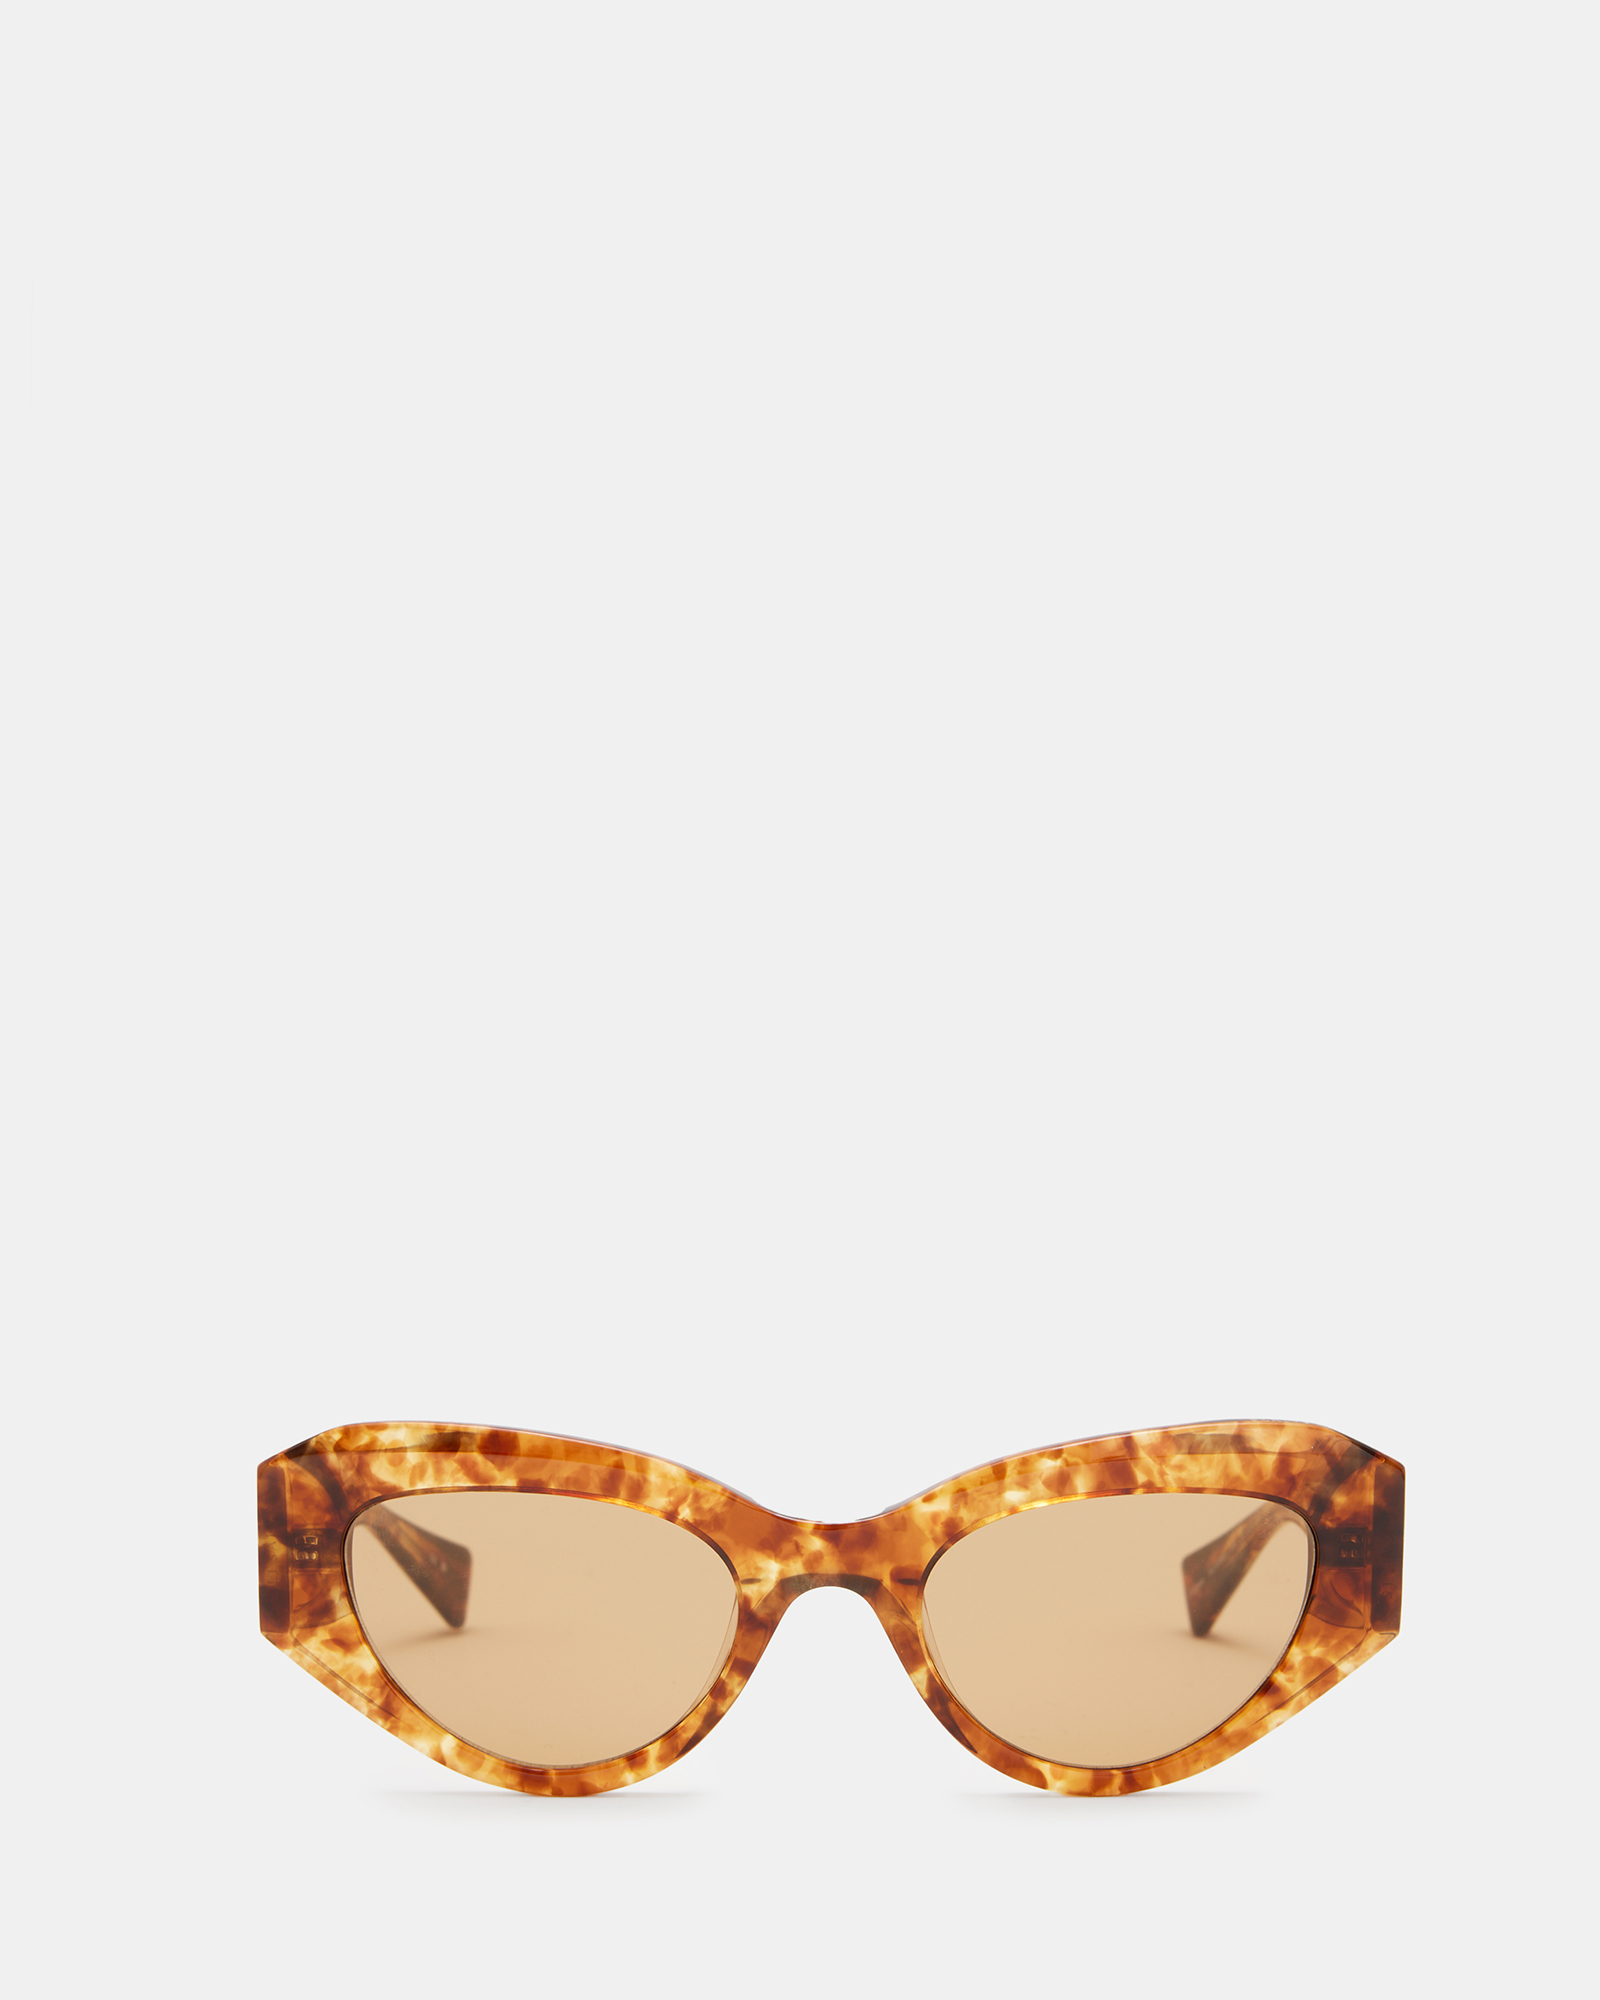 AllSaints Calypso Bevelled Cat Eye Sunglasses,, TORT RUST